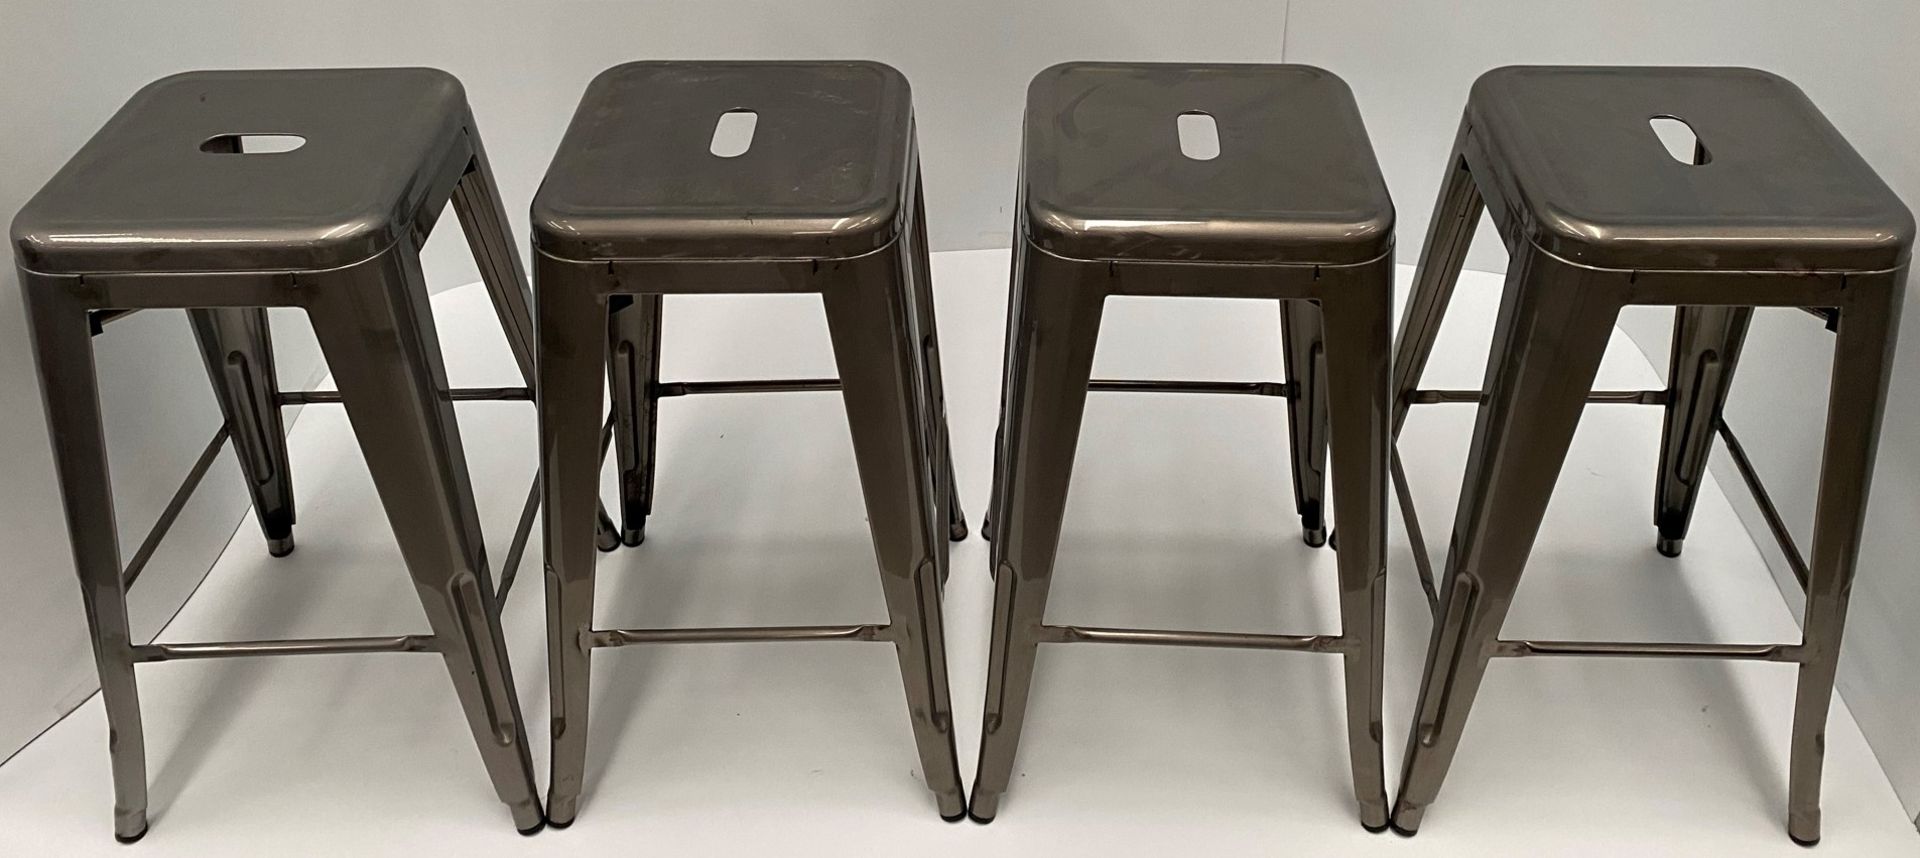 4 x brushed metal transparent high bar stools 675mm - no box,